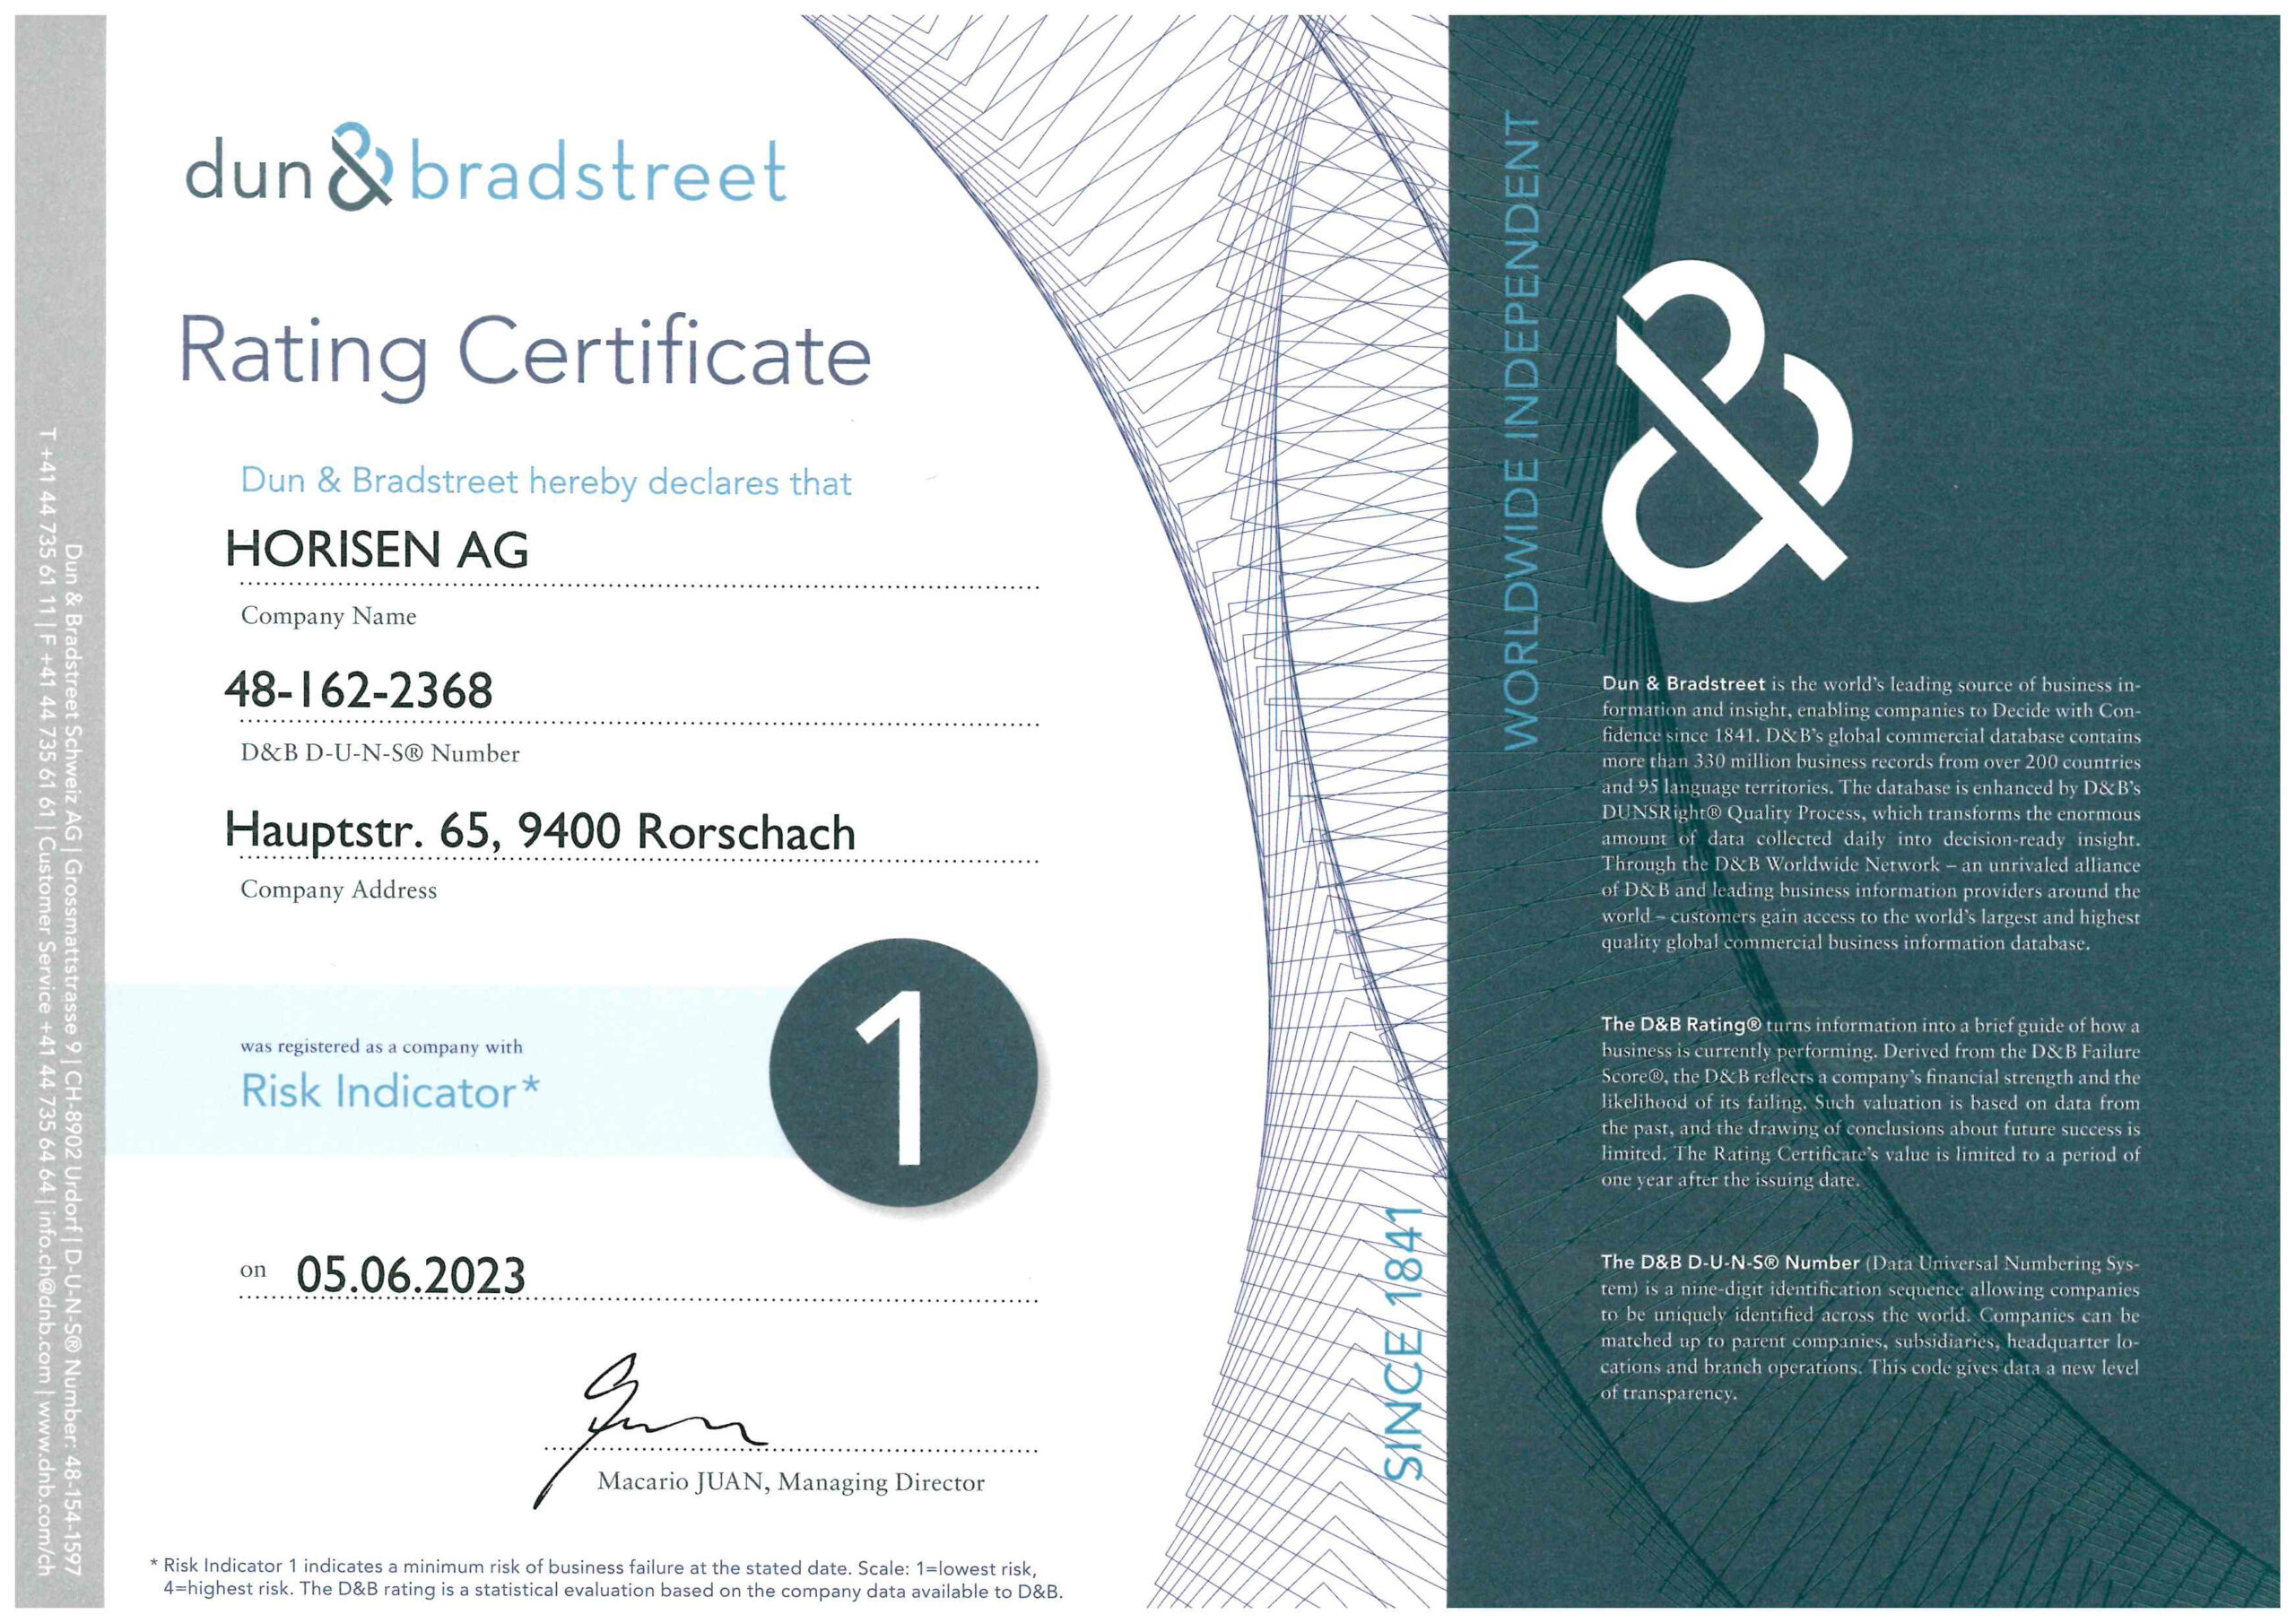 Rating Certificate from Dun & Bradstreet 2023